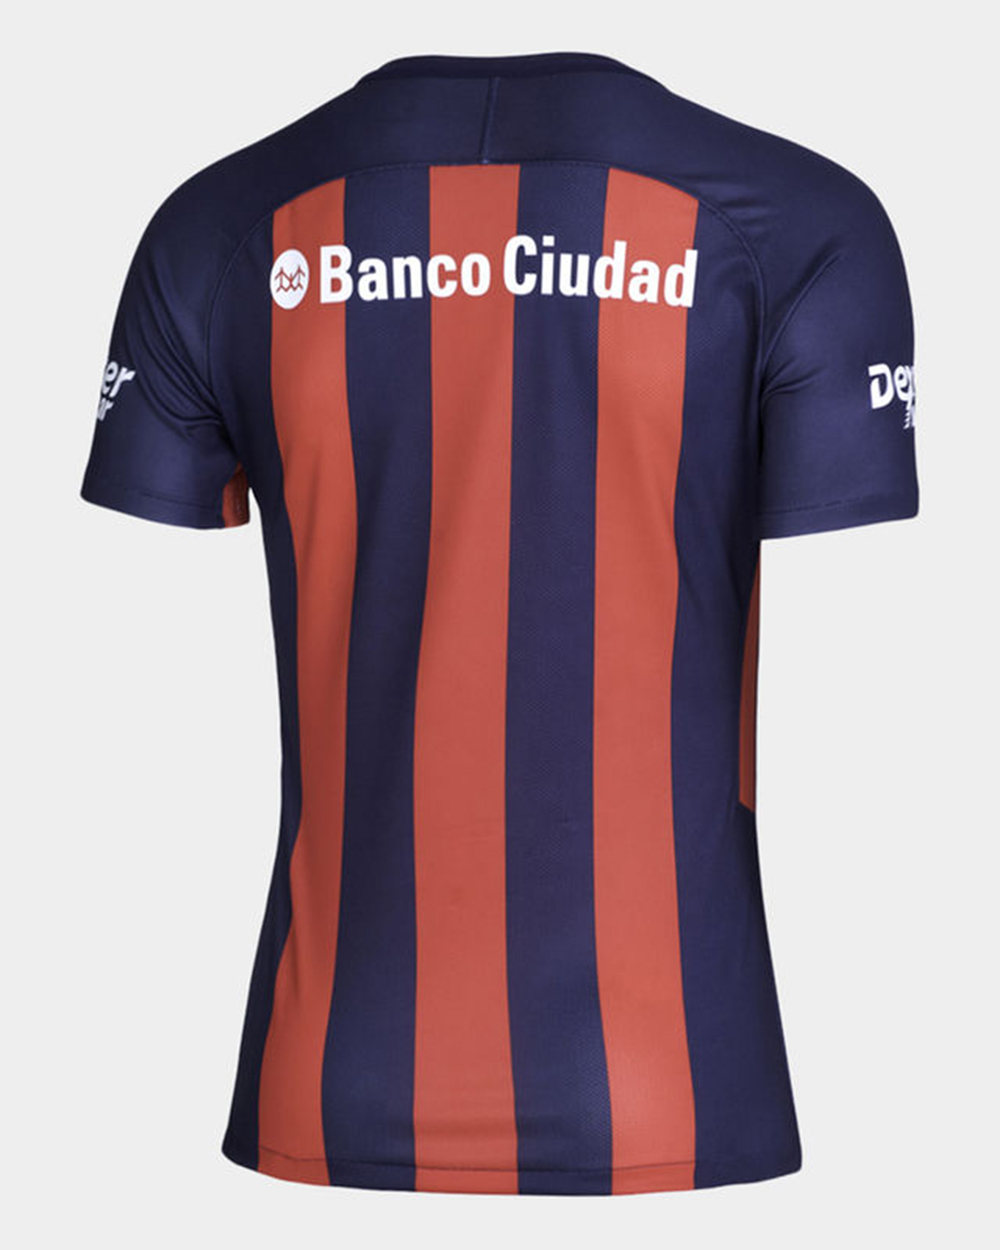 Camiseta Nike de San Lorenzo 2018